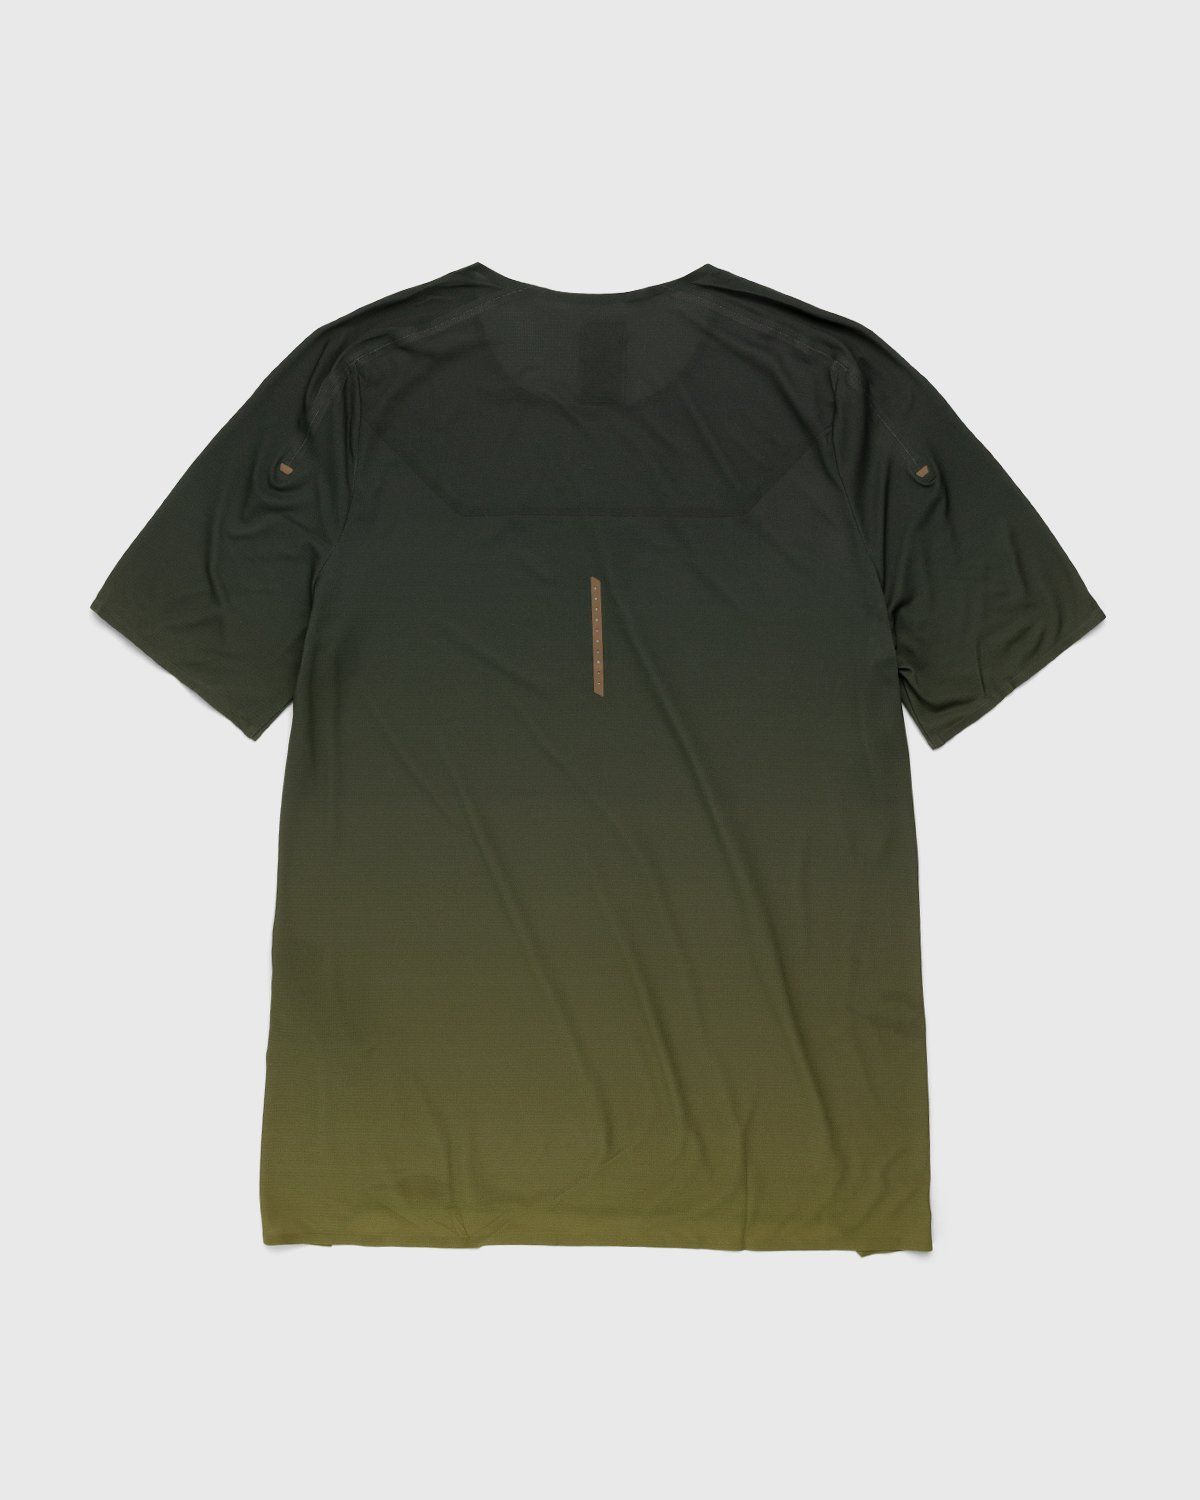 Loewe x On – Men's Performance T-Shirt Gradient Khaki - T-Shirts - Orange - Image 2